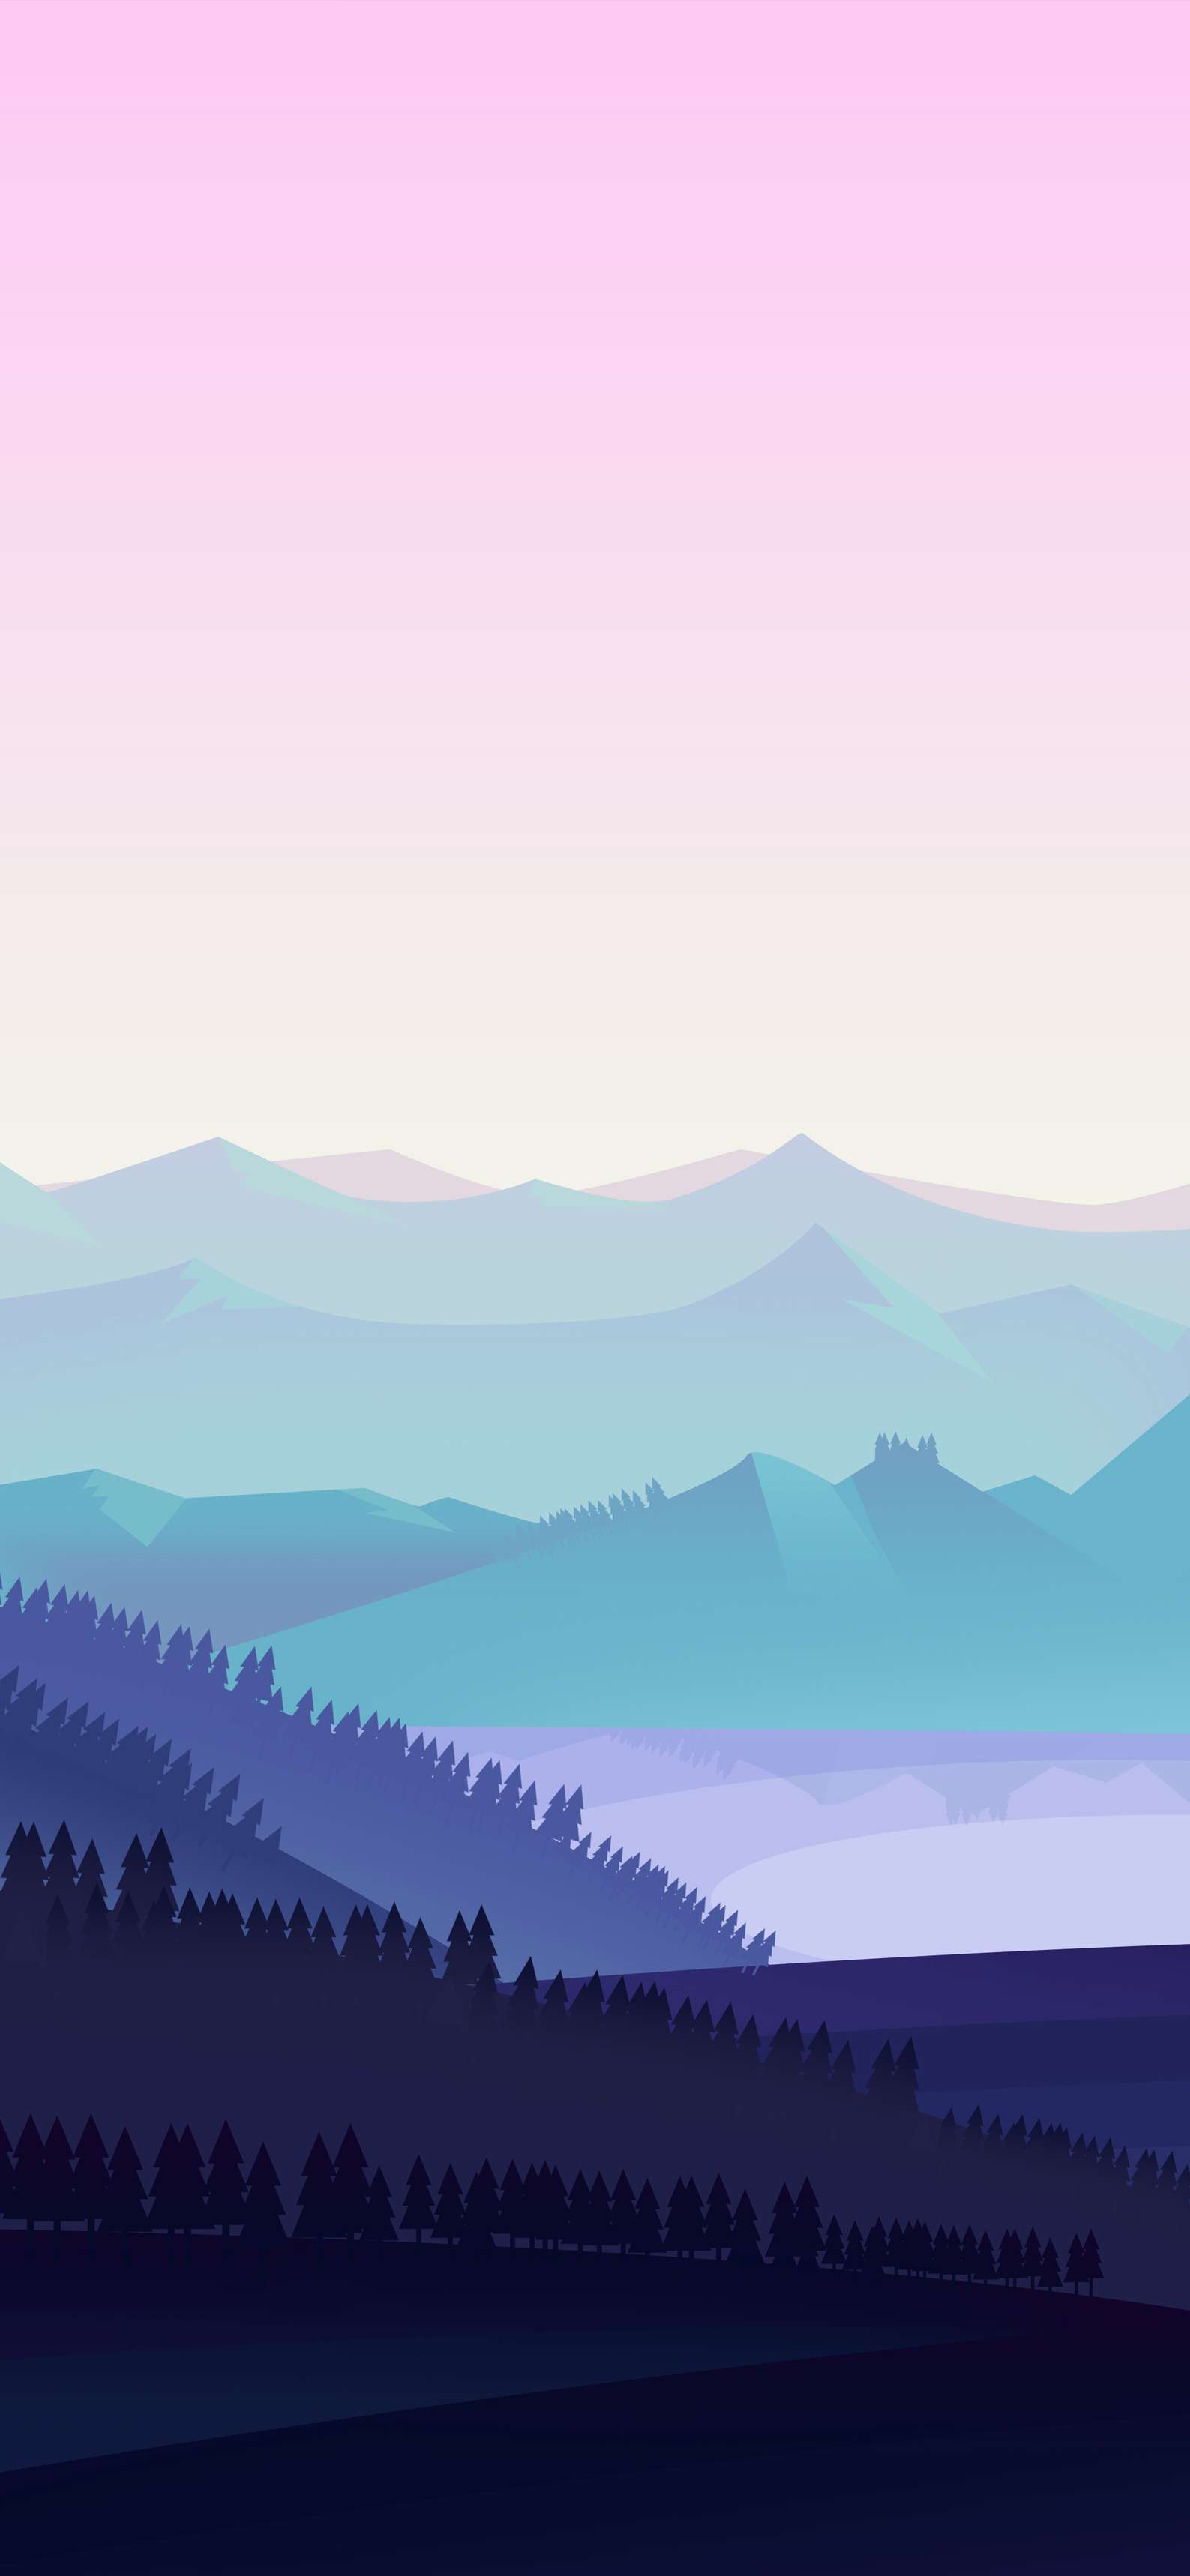 Cartoon Landscape iPhone Wallpaper